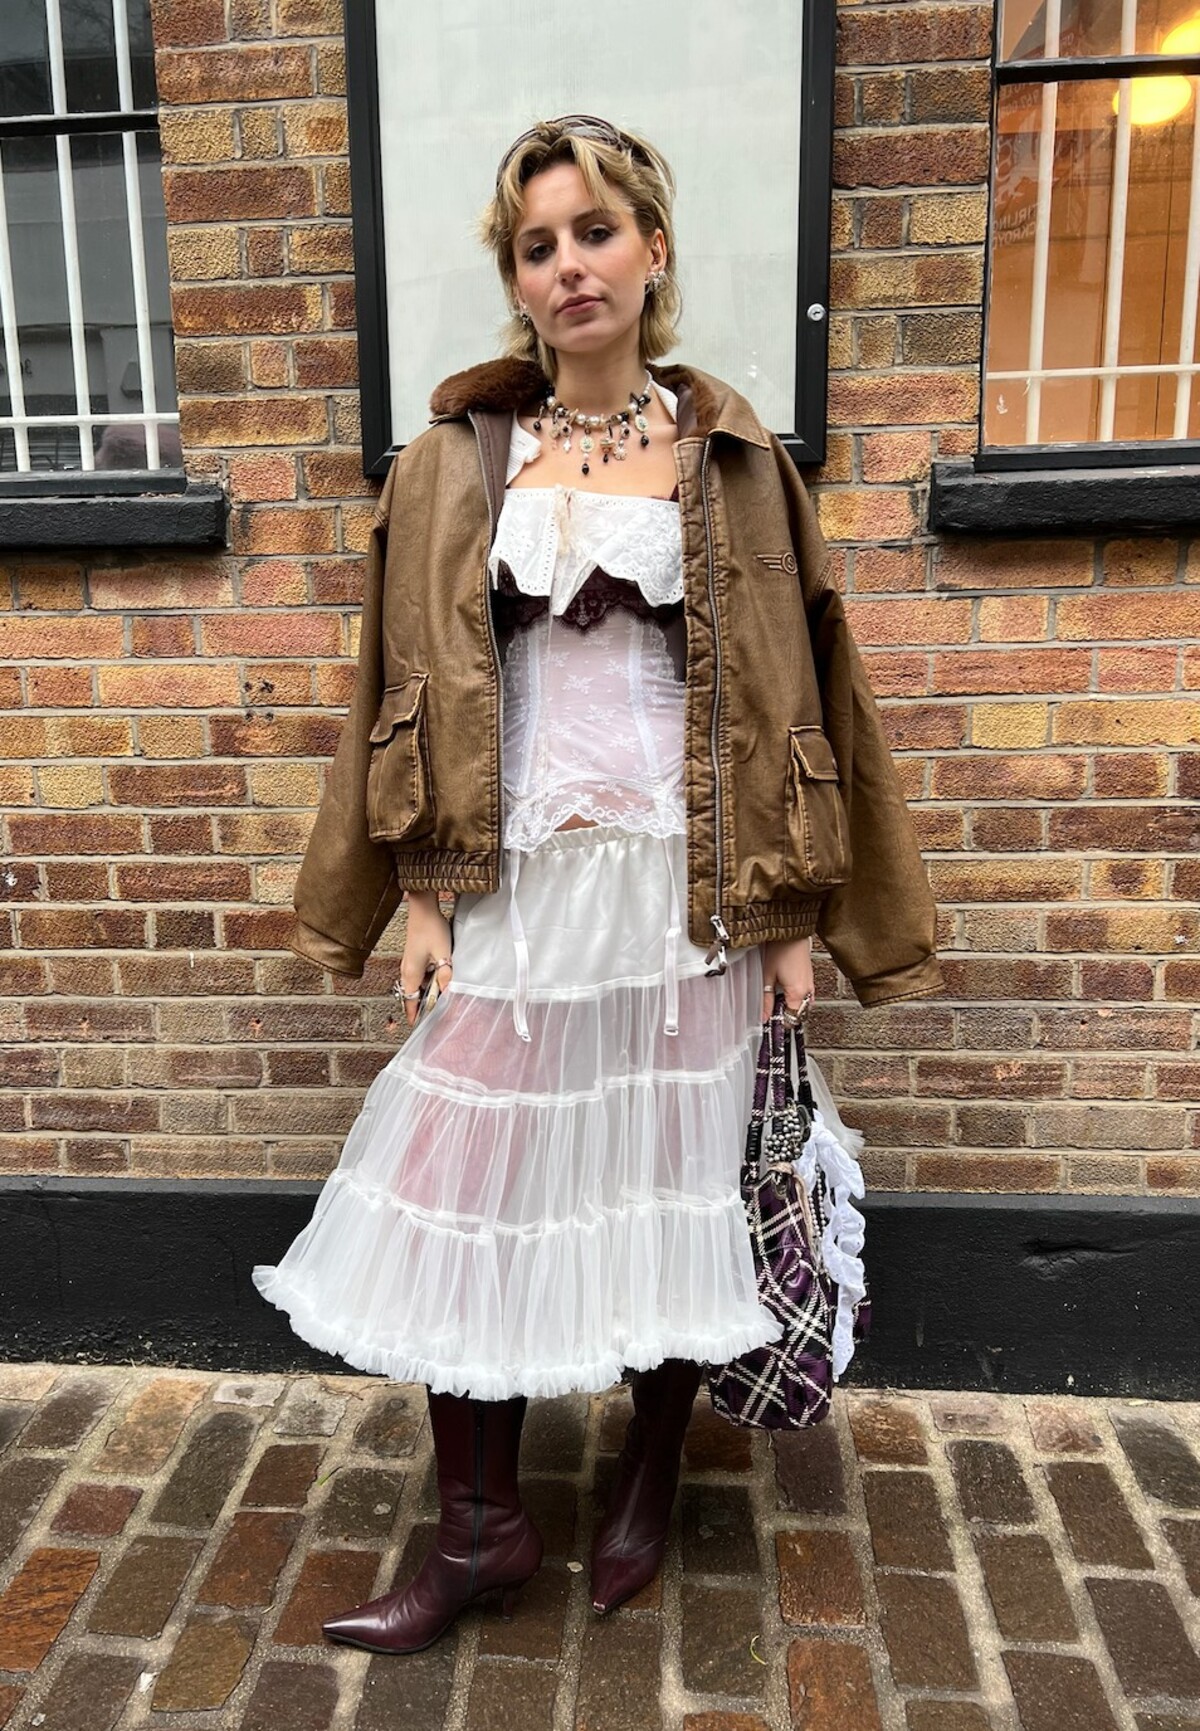 Tohtoročný londýnsky fashion week ovládli najmä vintage outfity.